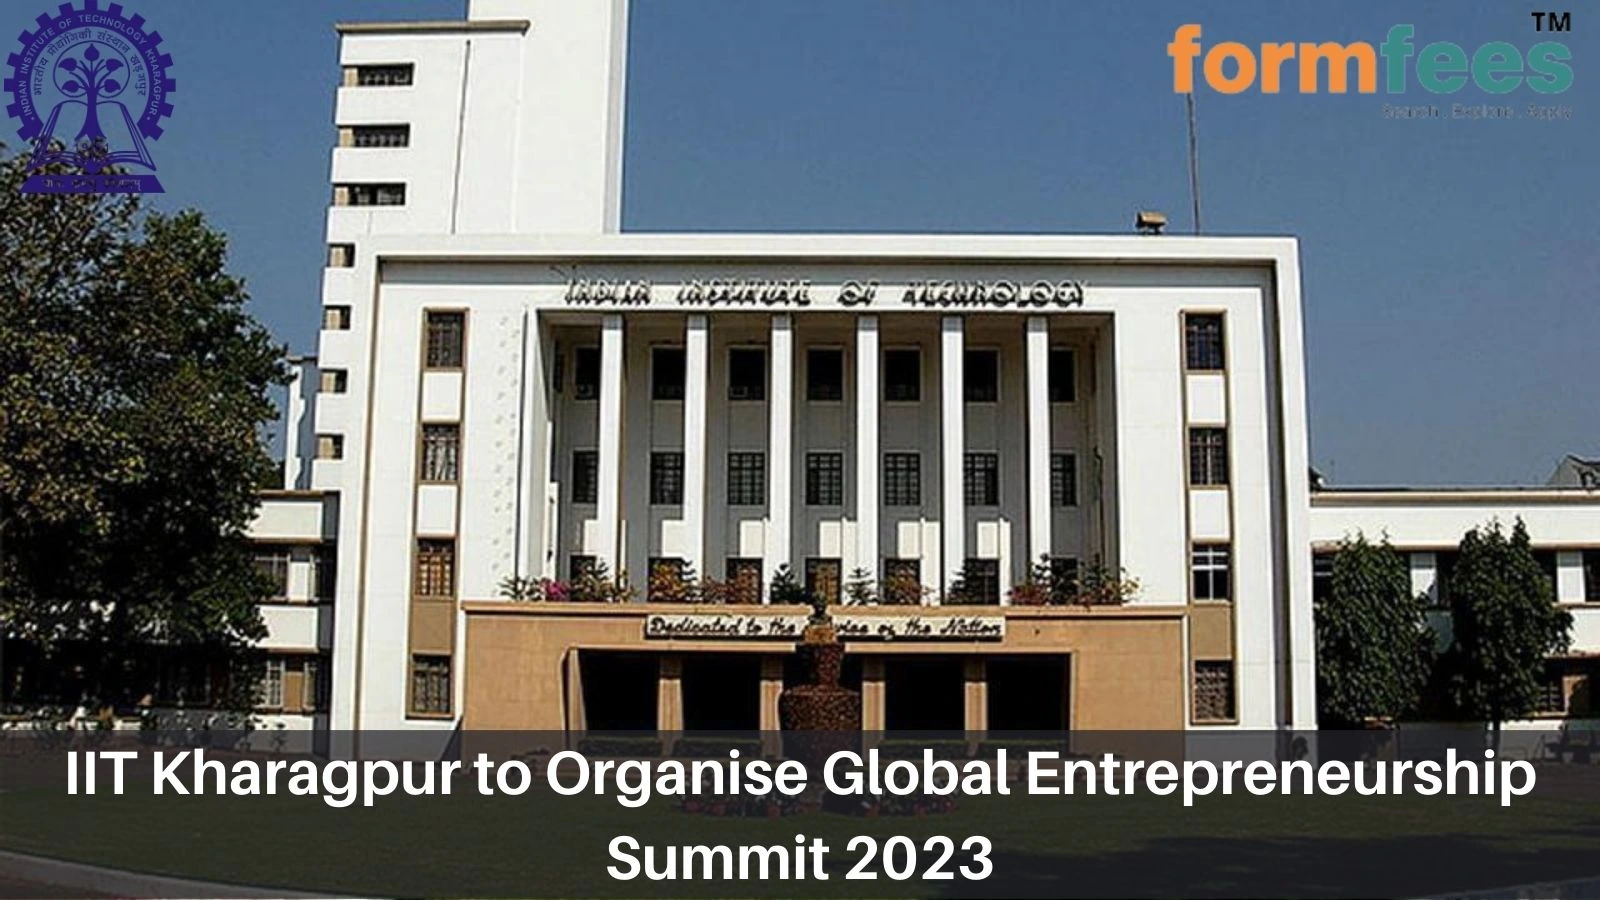 IIT Kharagpur to Organise Global Entrepreneurship Summit 2023